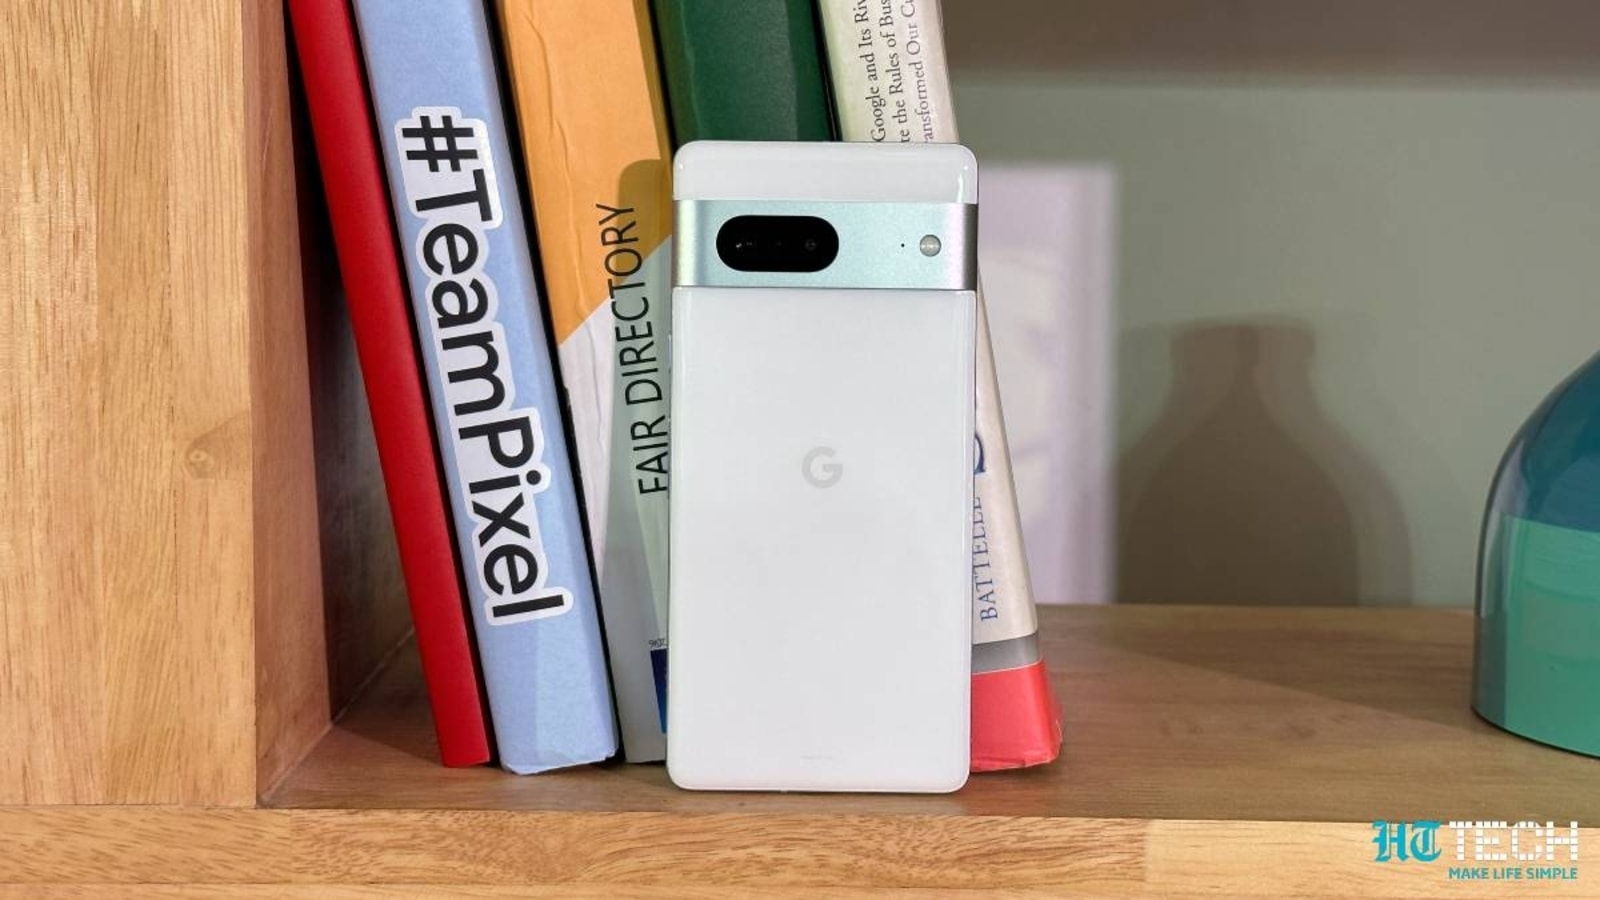 Google Pixel 6a specs: Tensor chip, 12MP camera, more - 9to5Google